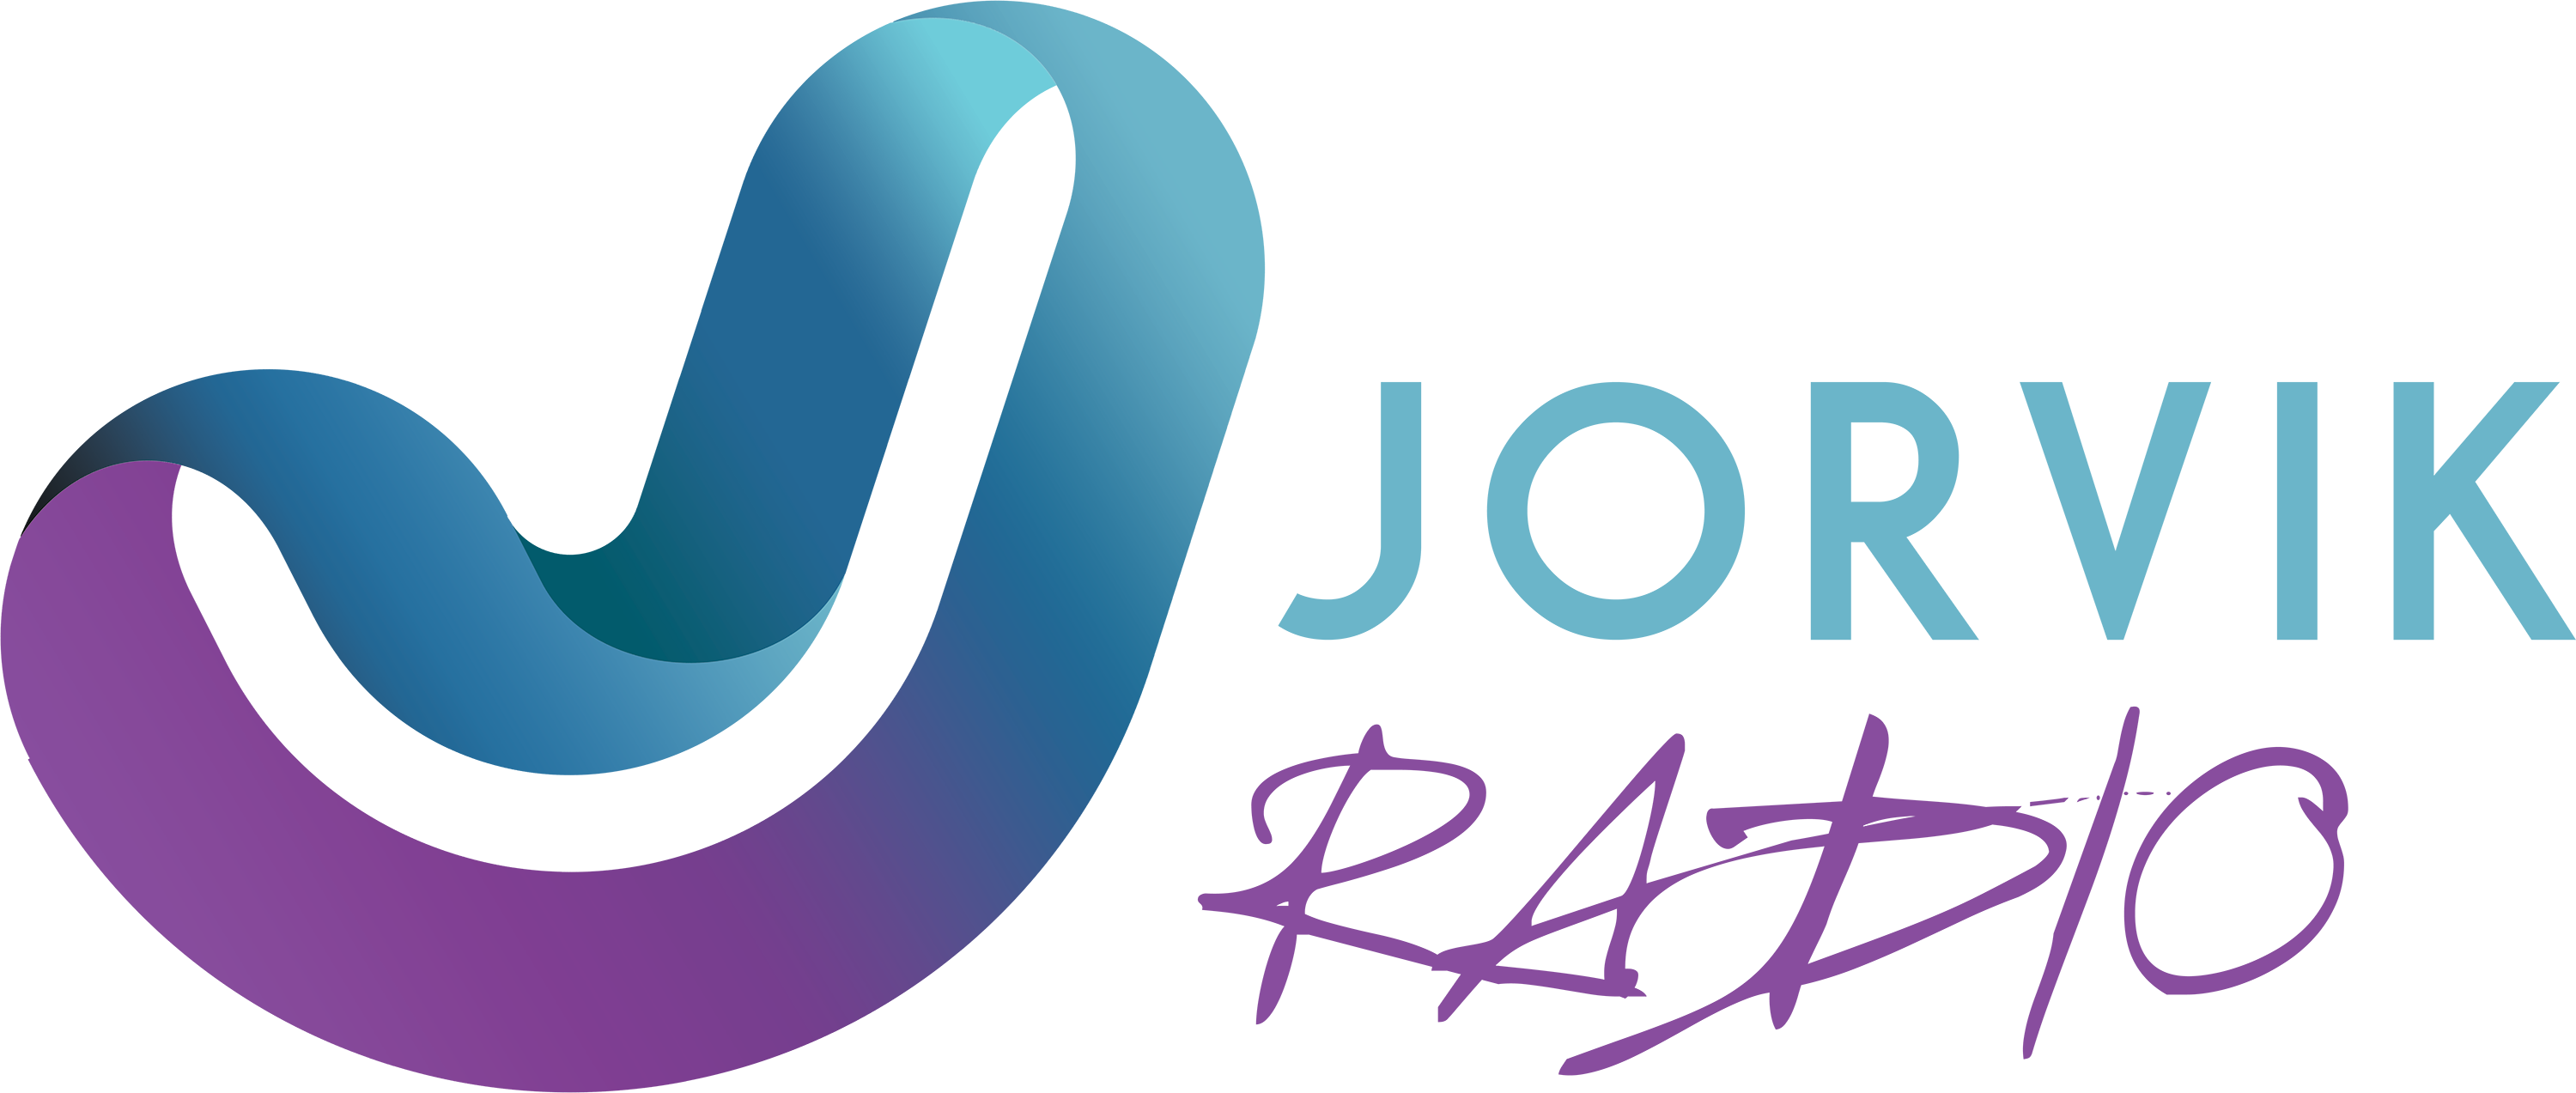 Jorvik Radio | The Soundtrack to Your Day | 94.8FM, Online, & Smart Speakers